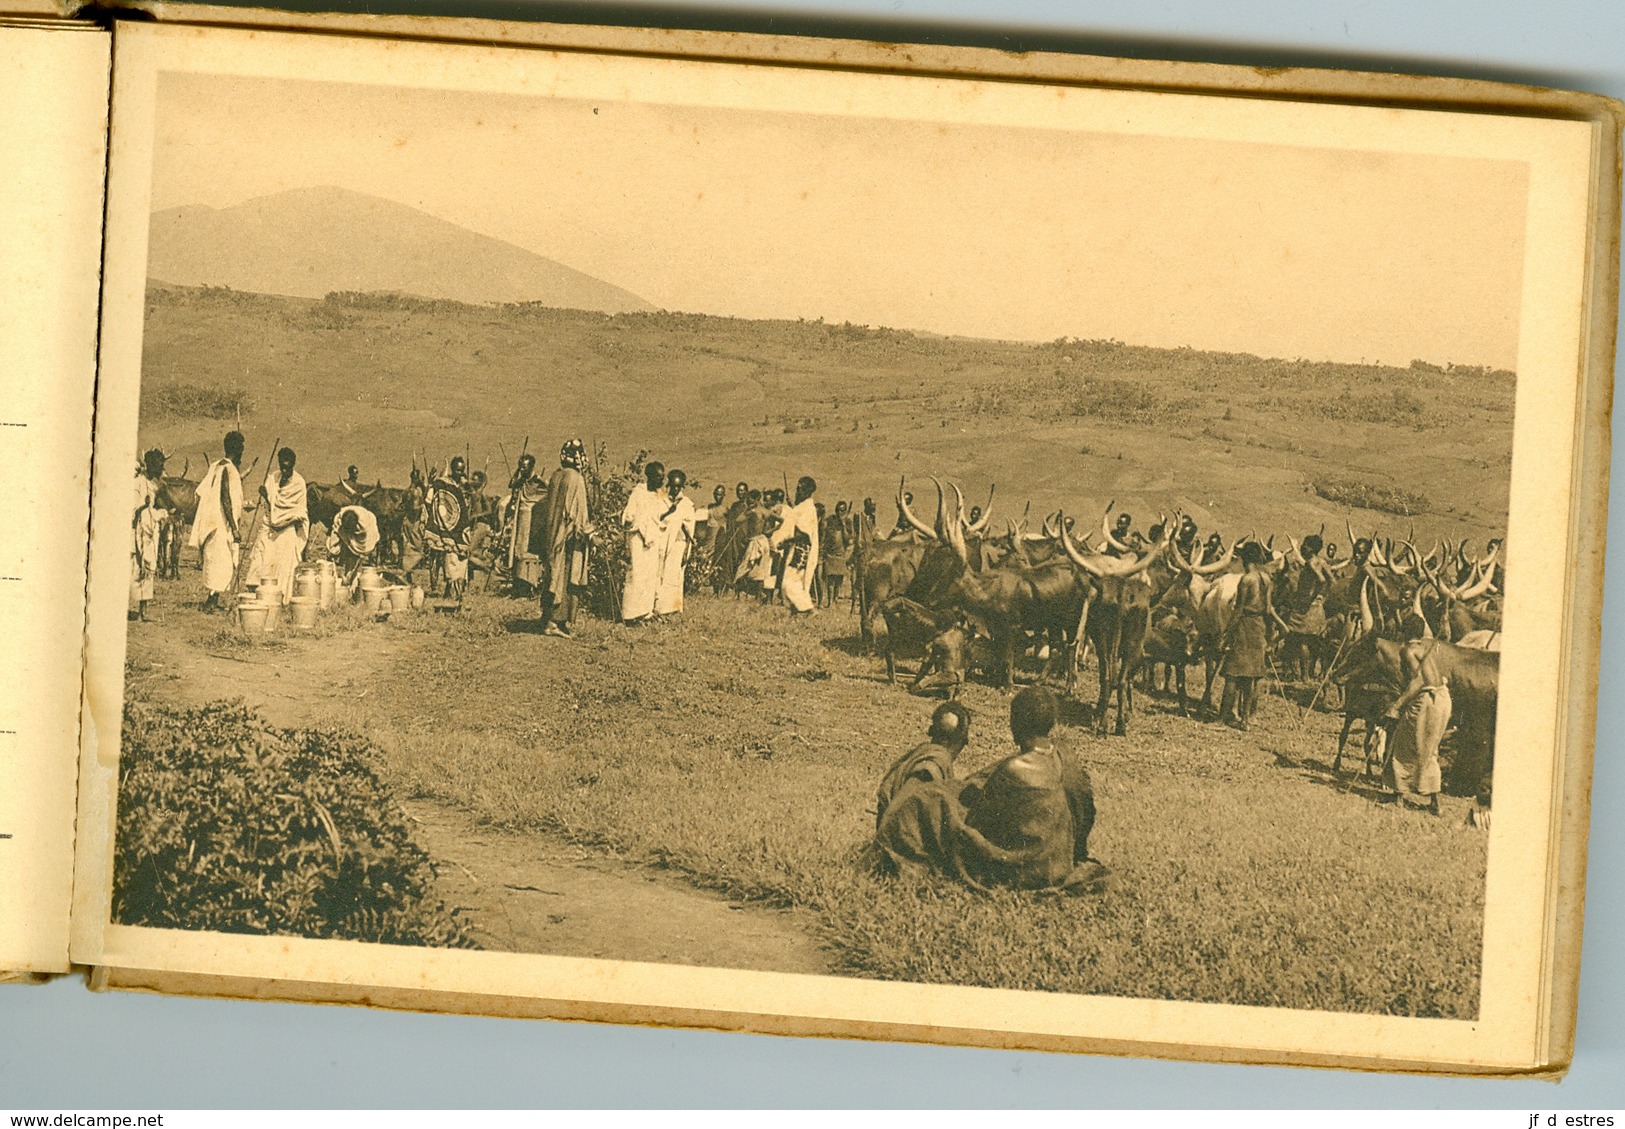 10 CP Ruanda Urundi "Scènes" travaux ménagers Ed. Jos Dardenne 1 carnet sér. 2 D bis. 1930 Ethnographie Rwanda Burundi